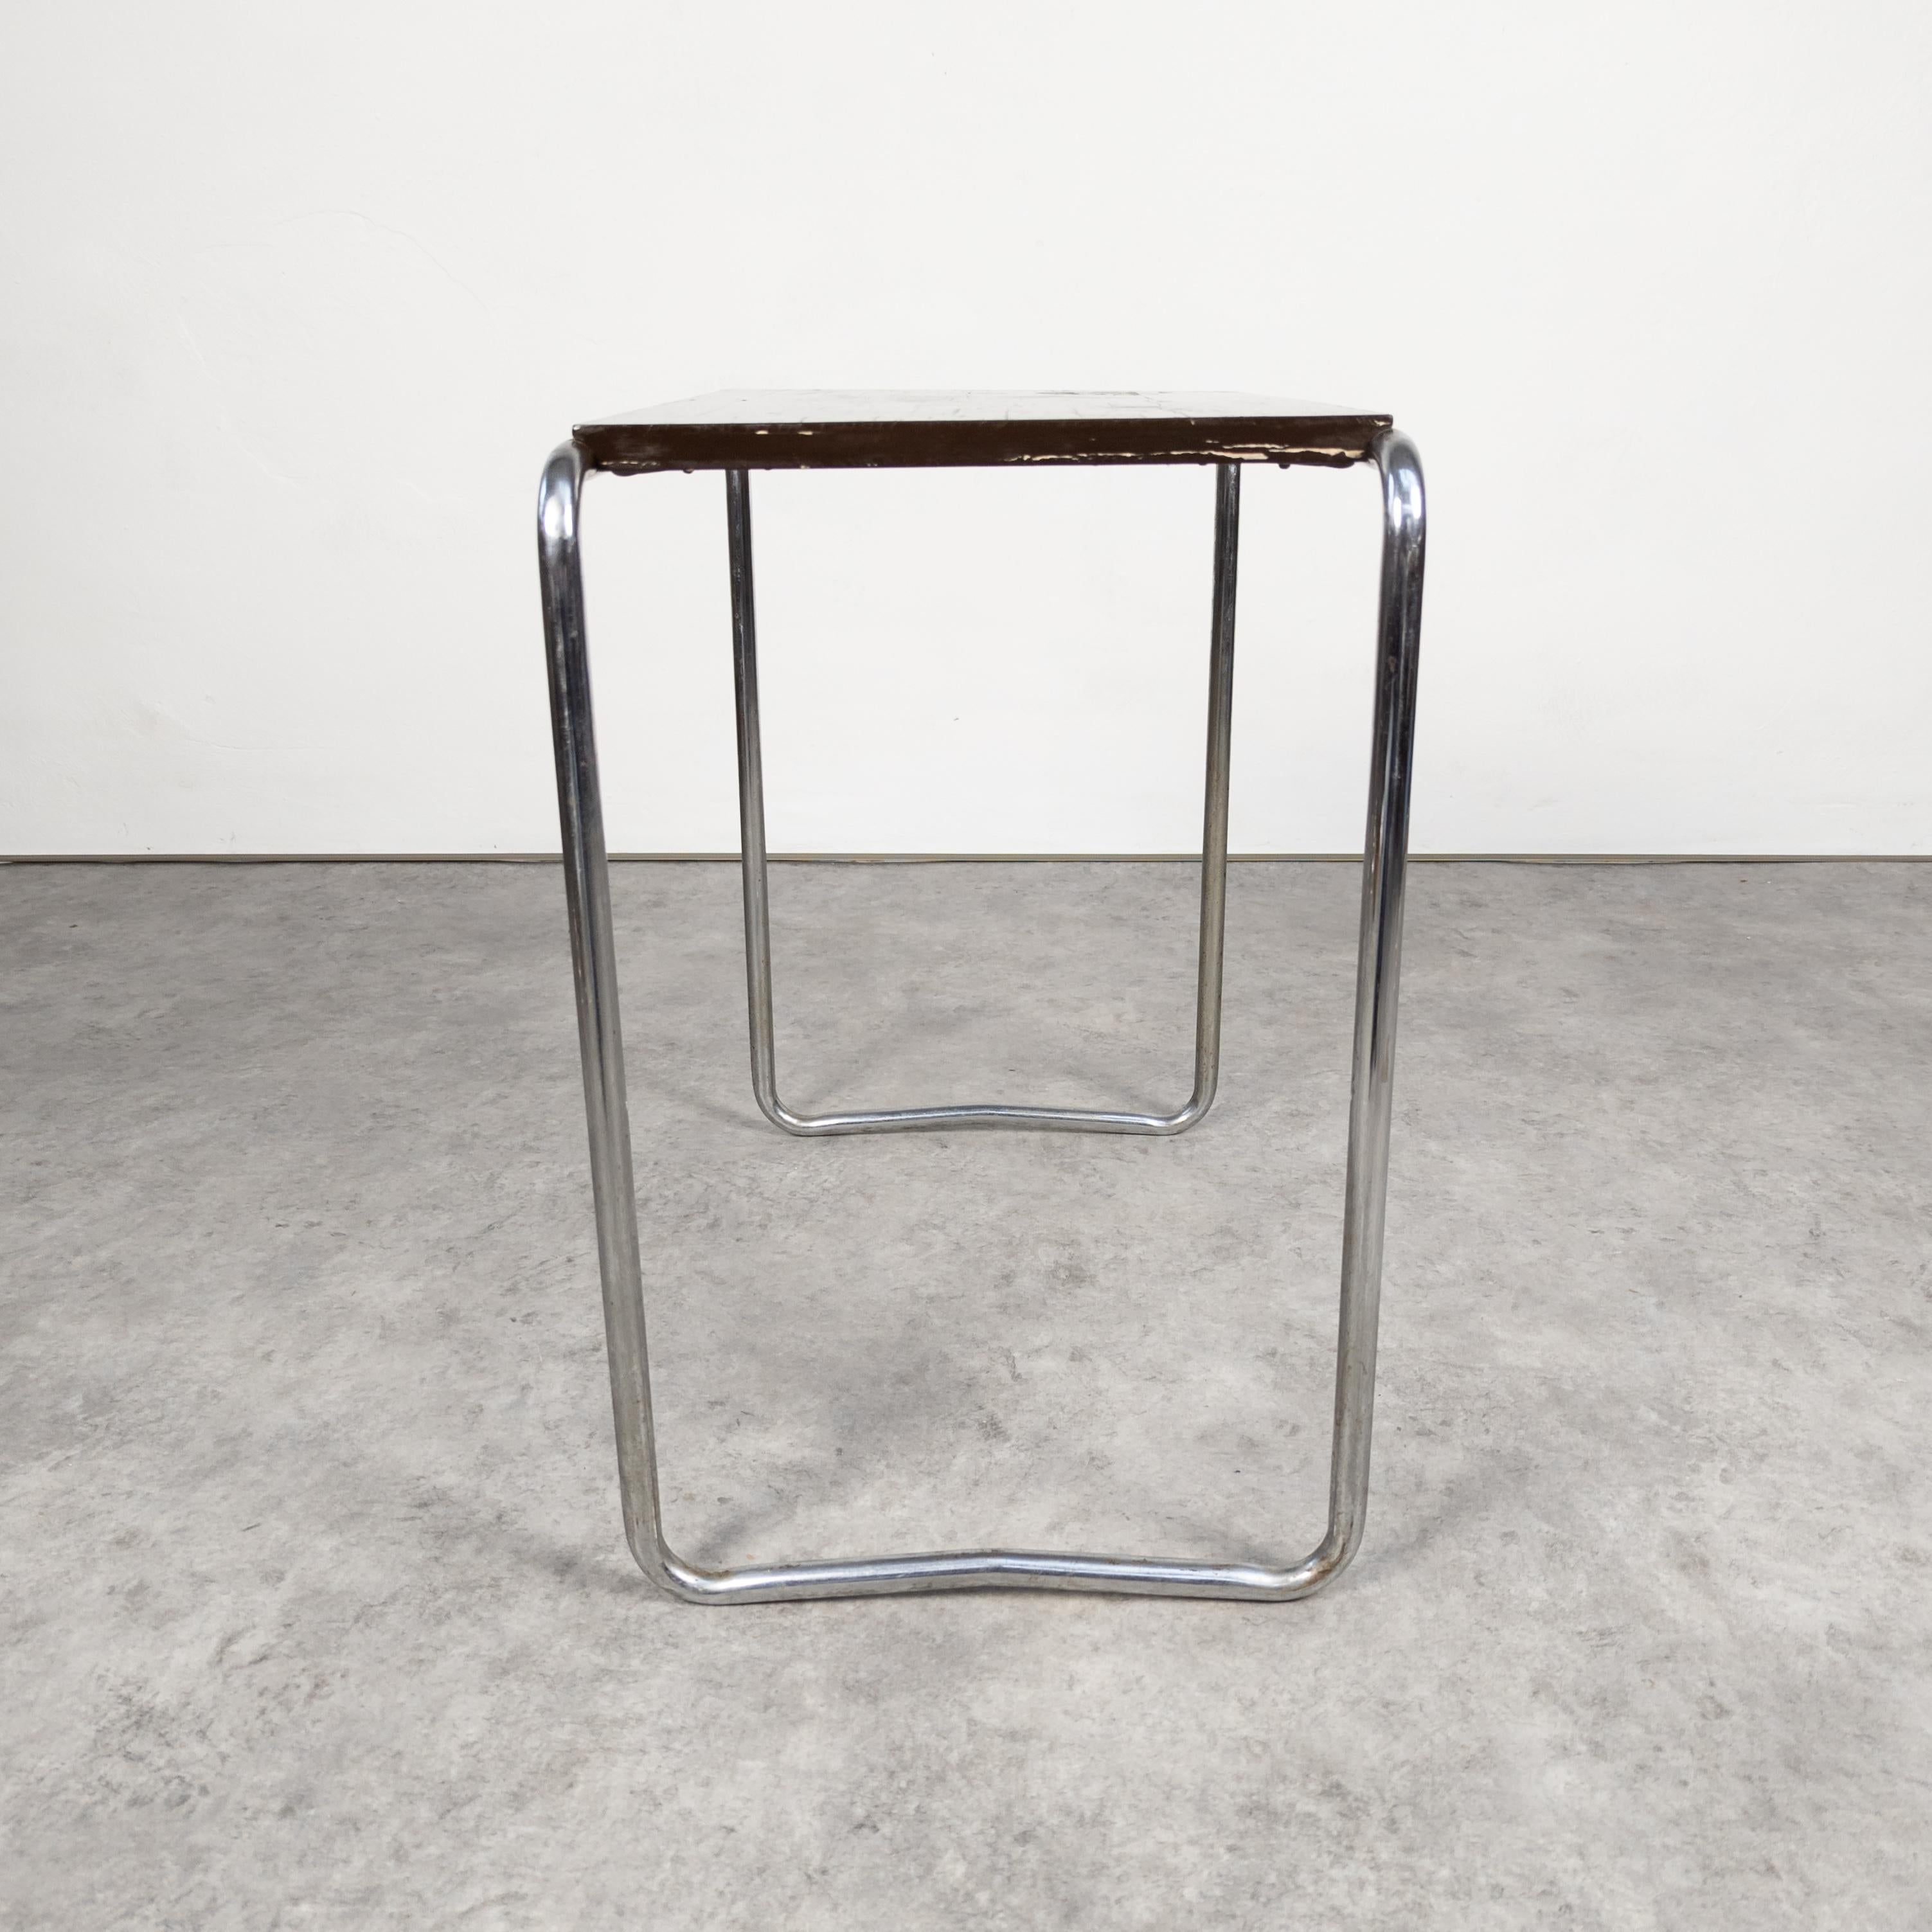 Bauhaus Thonet B 9 Table by Marcel Breuer For Sale